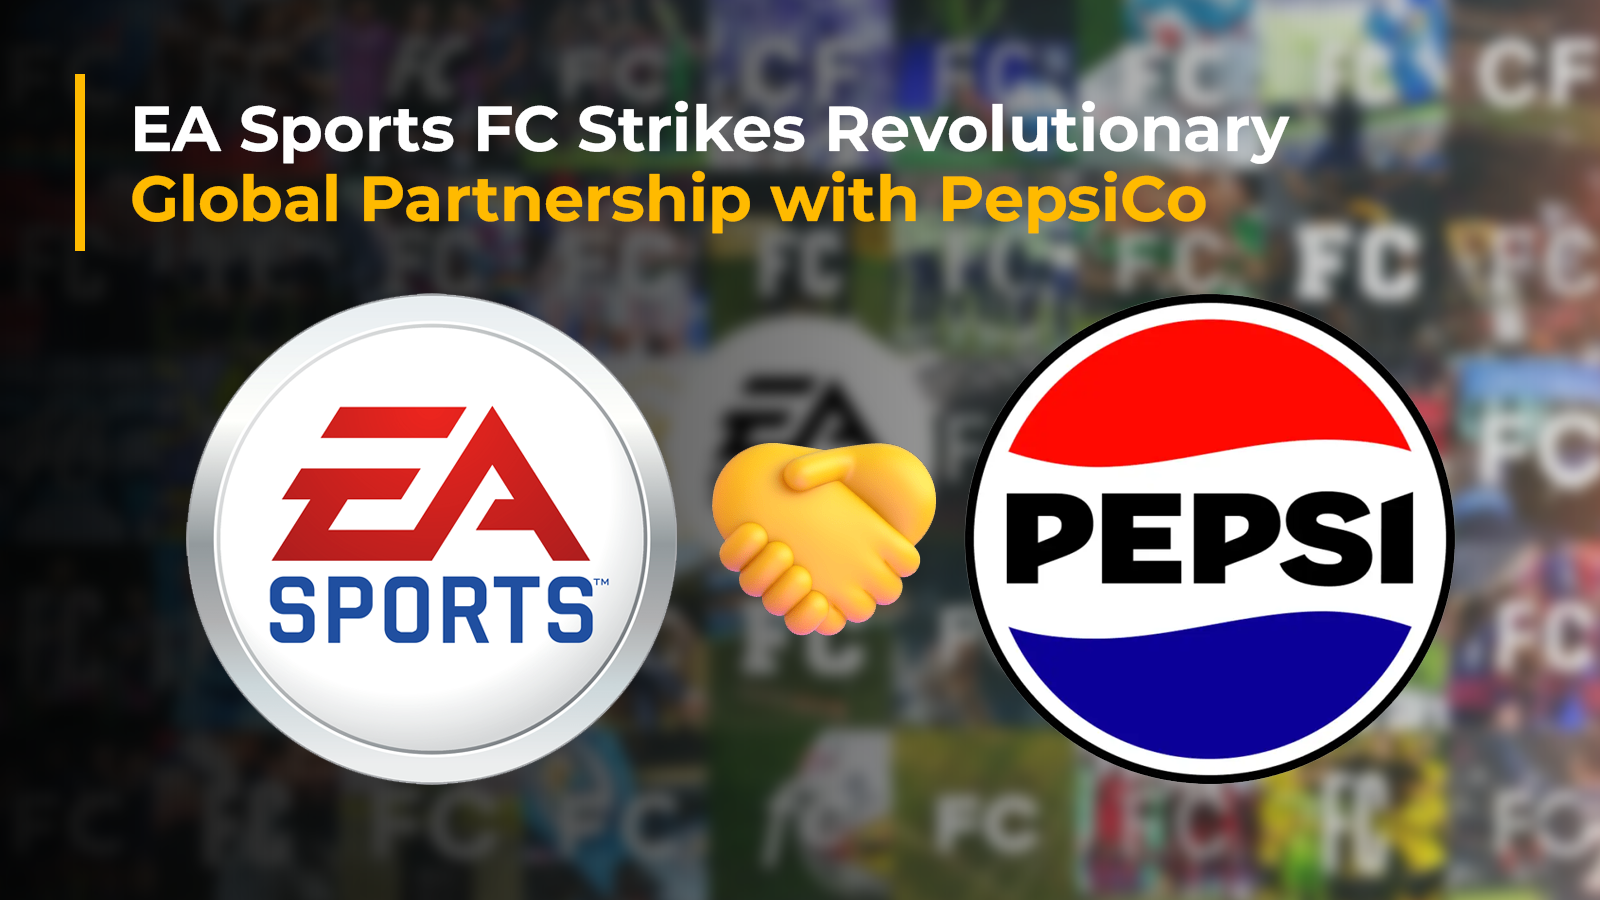 EA Sports FC Strikes Global Partnership with PepsiCo to Revolutionize Football Gaming